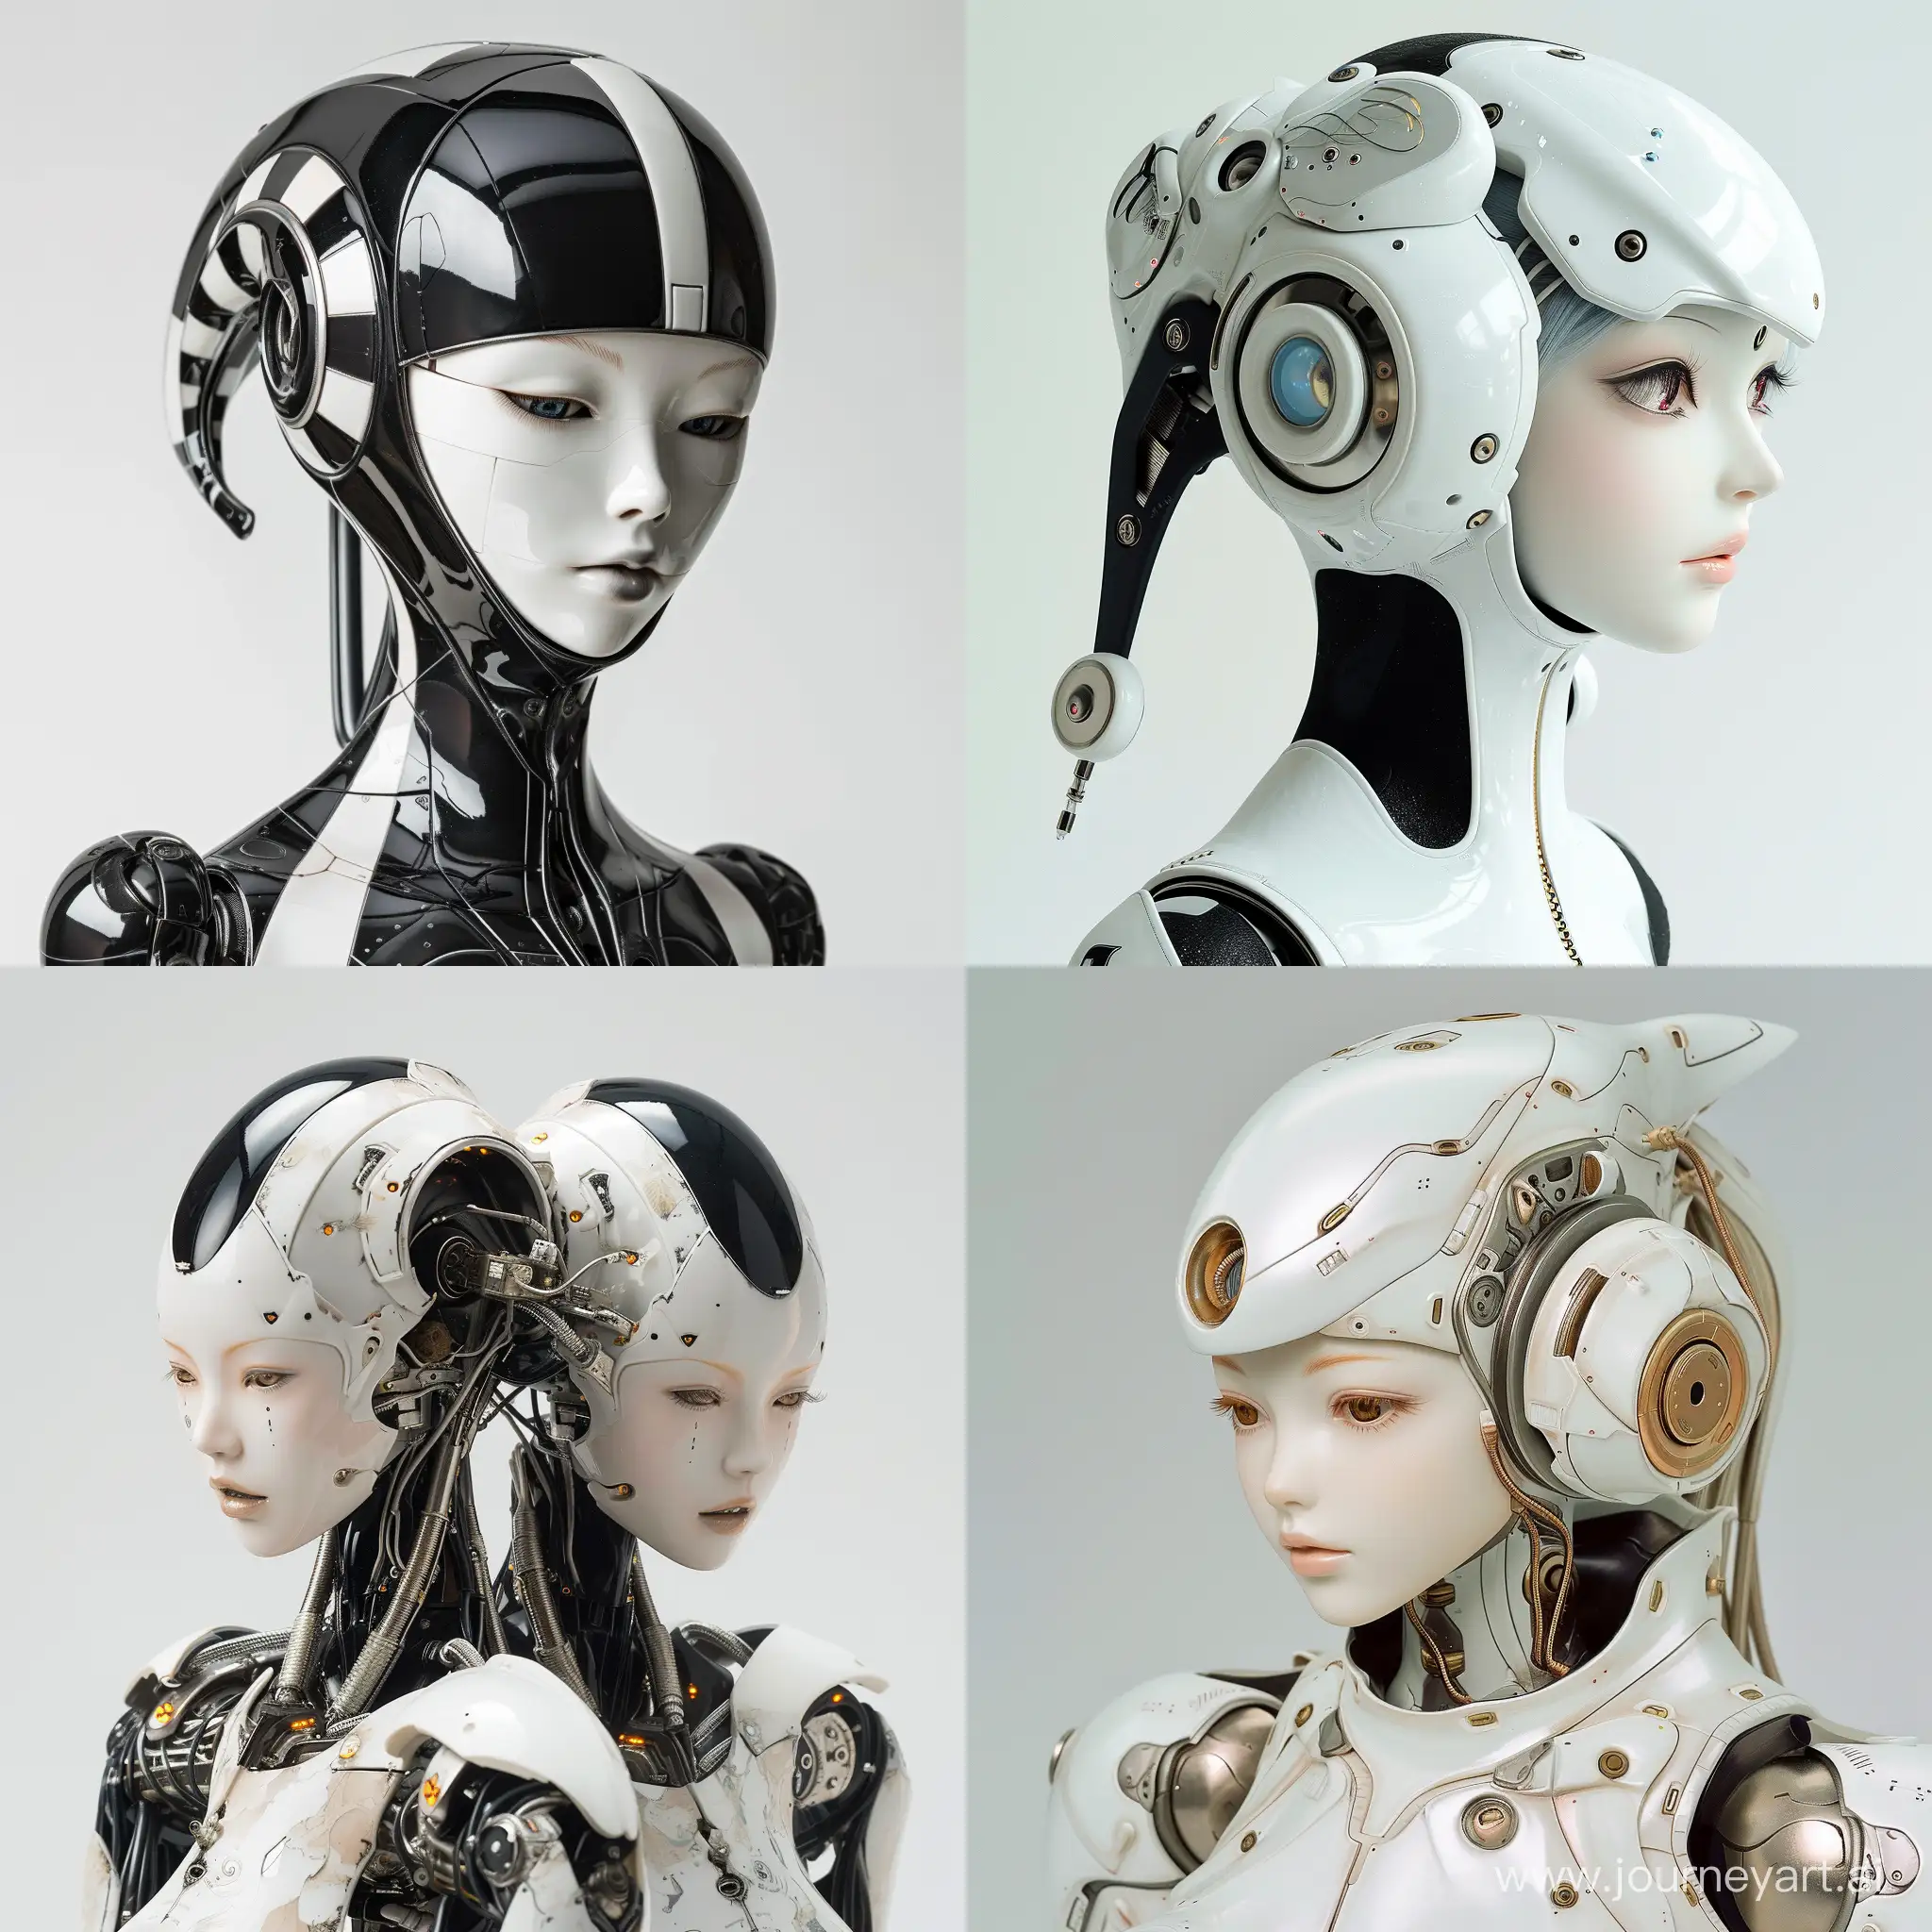 Hajime sorayama. Futuristic robot women. Fashion bid doll. 